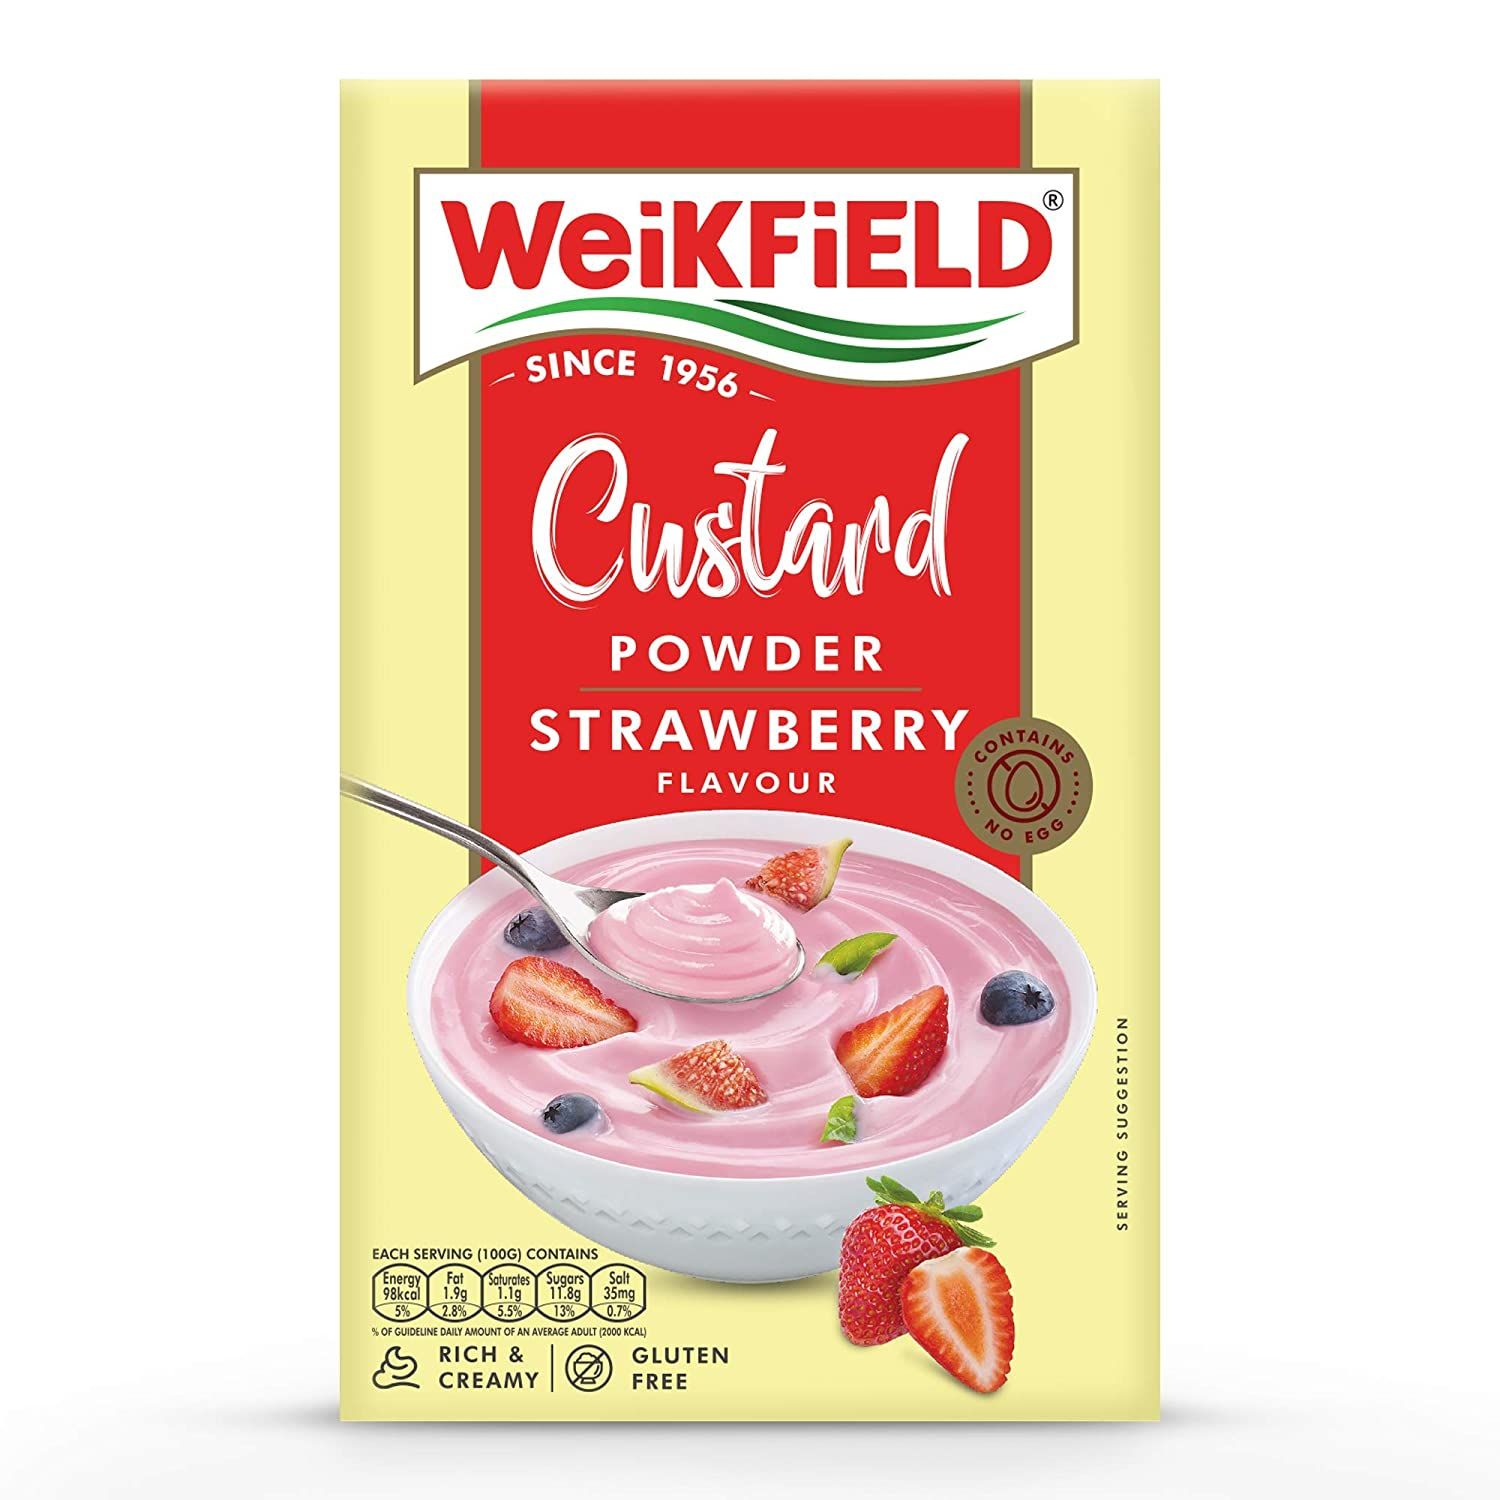 Weikfield Custard Powder Strawberry Image